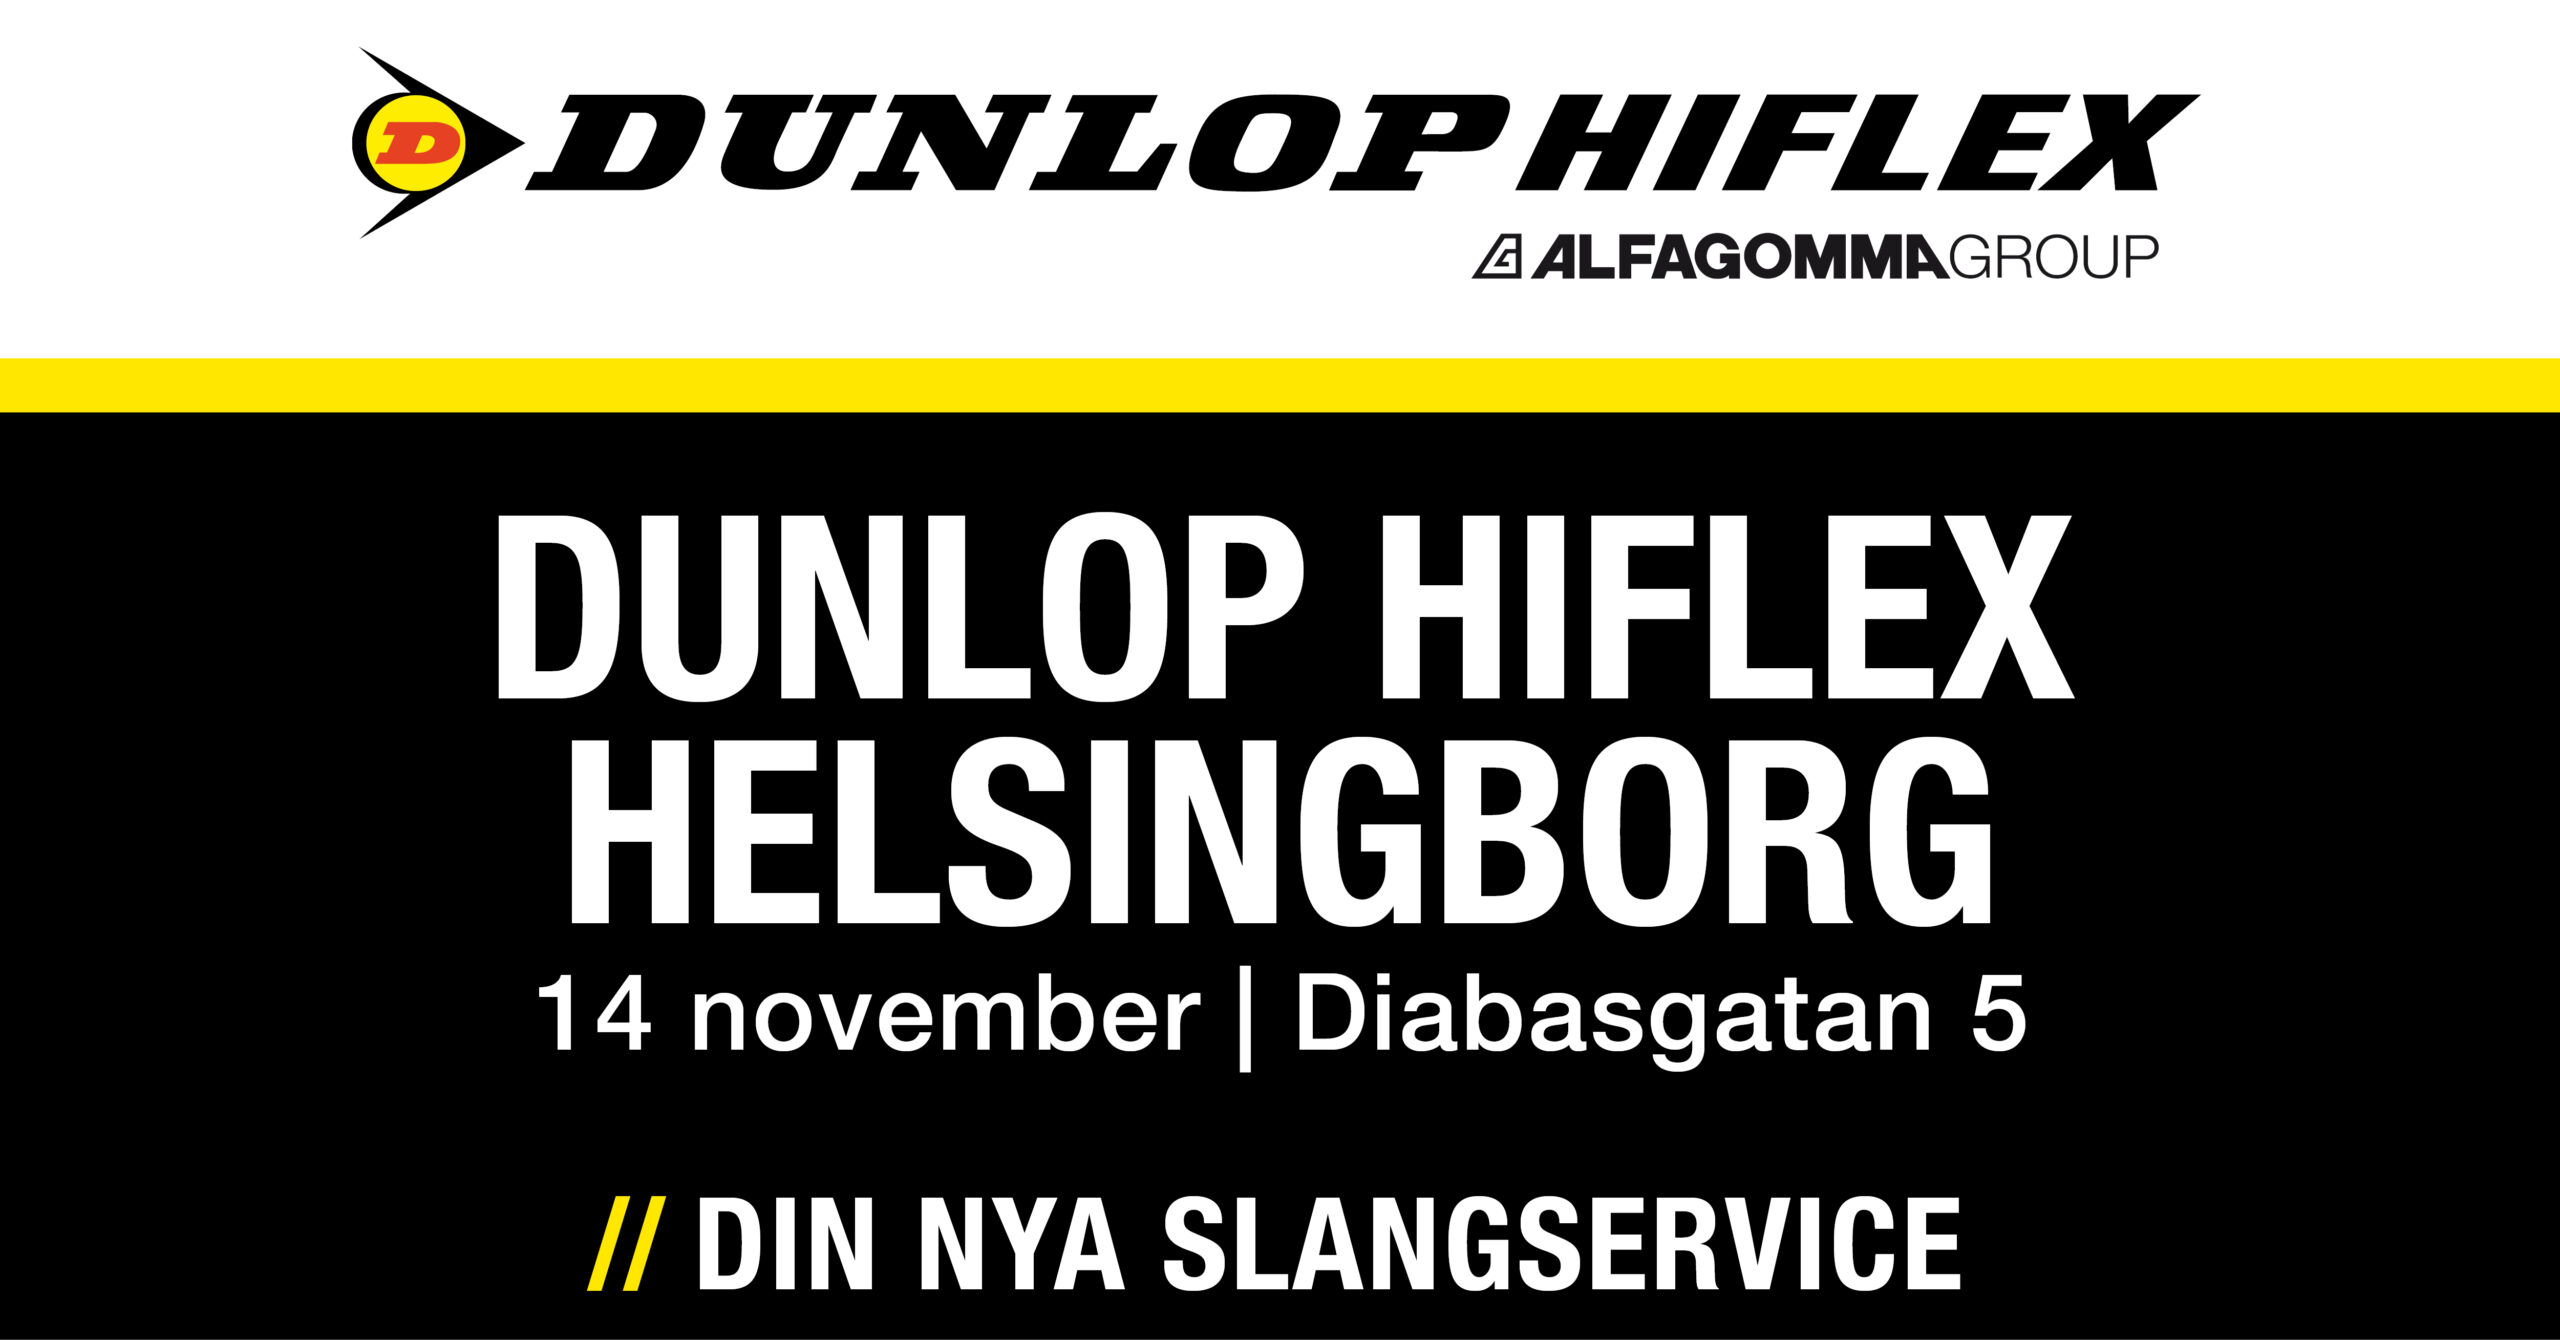 Nu öppnar Dunlop Hiflex i Helsingborg!